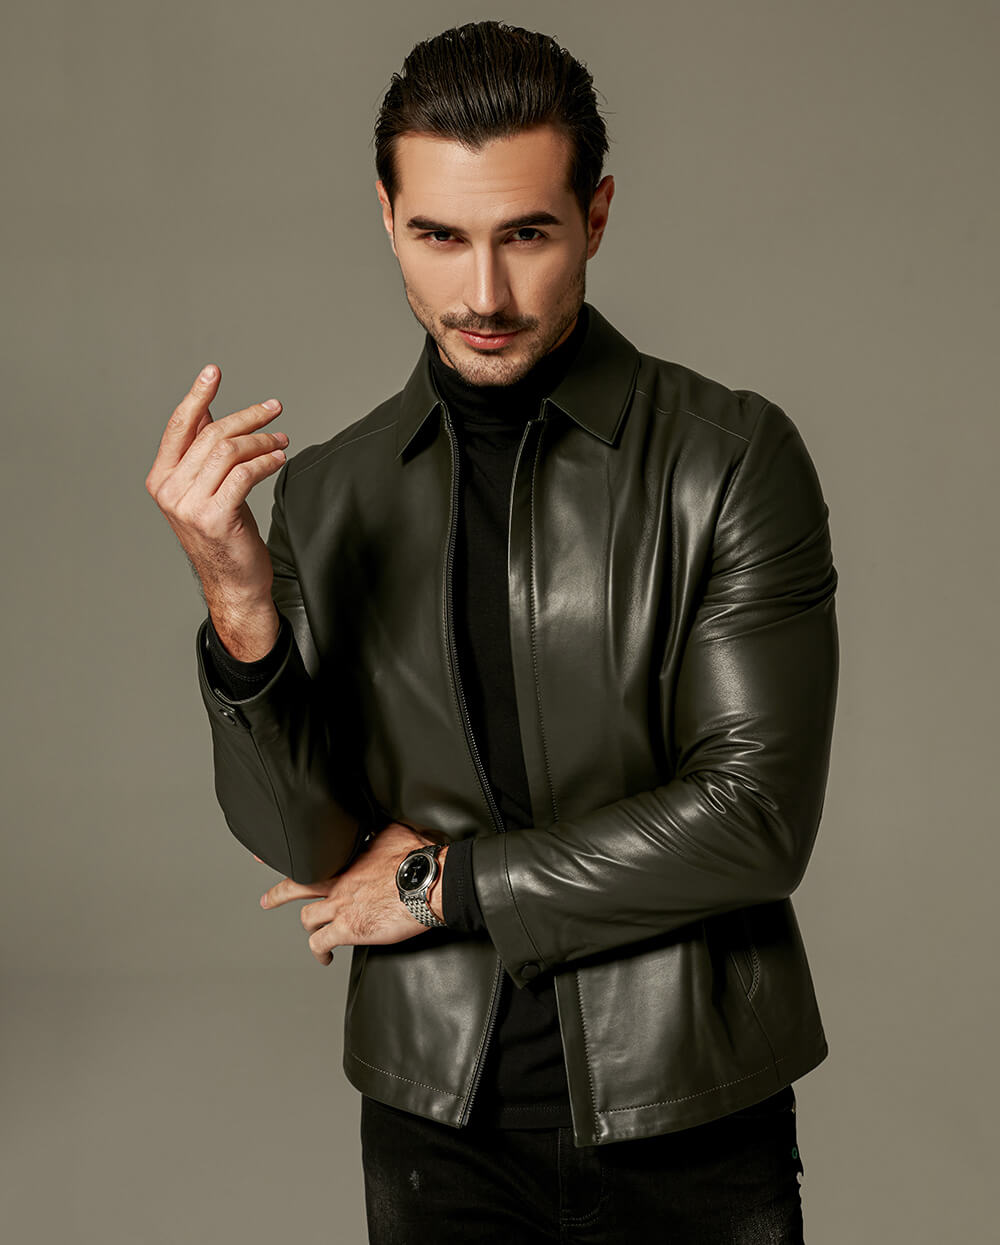 Palaleather UK  Leather Jackets For Men And Women